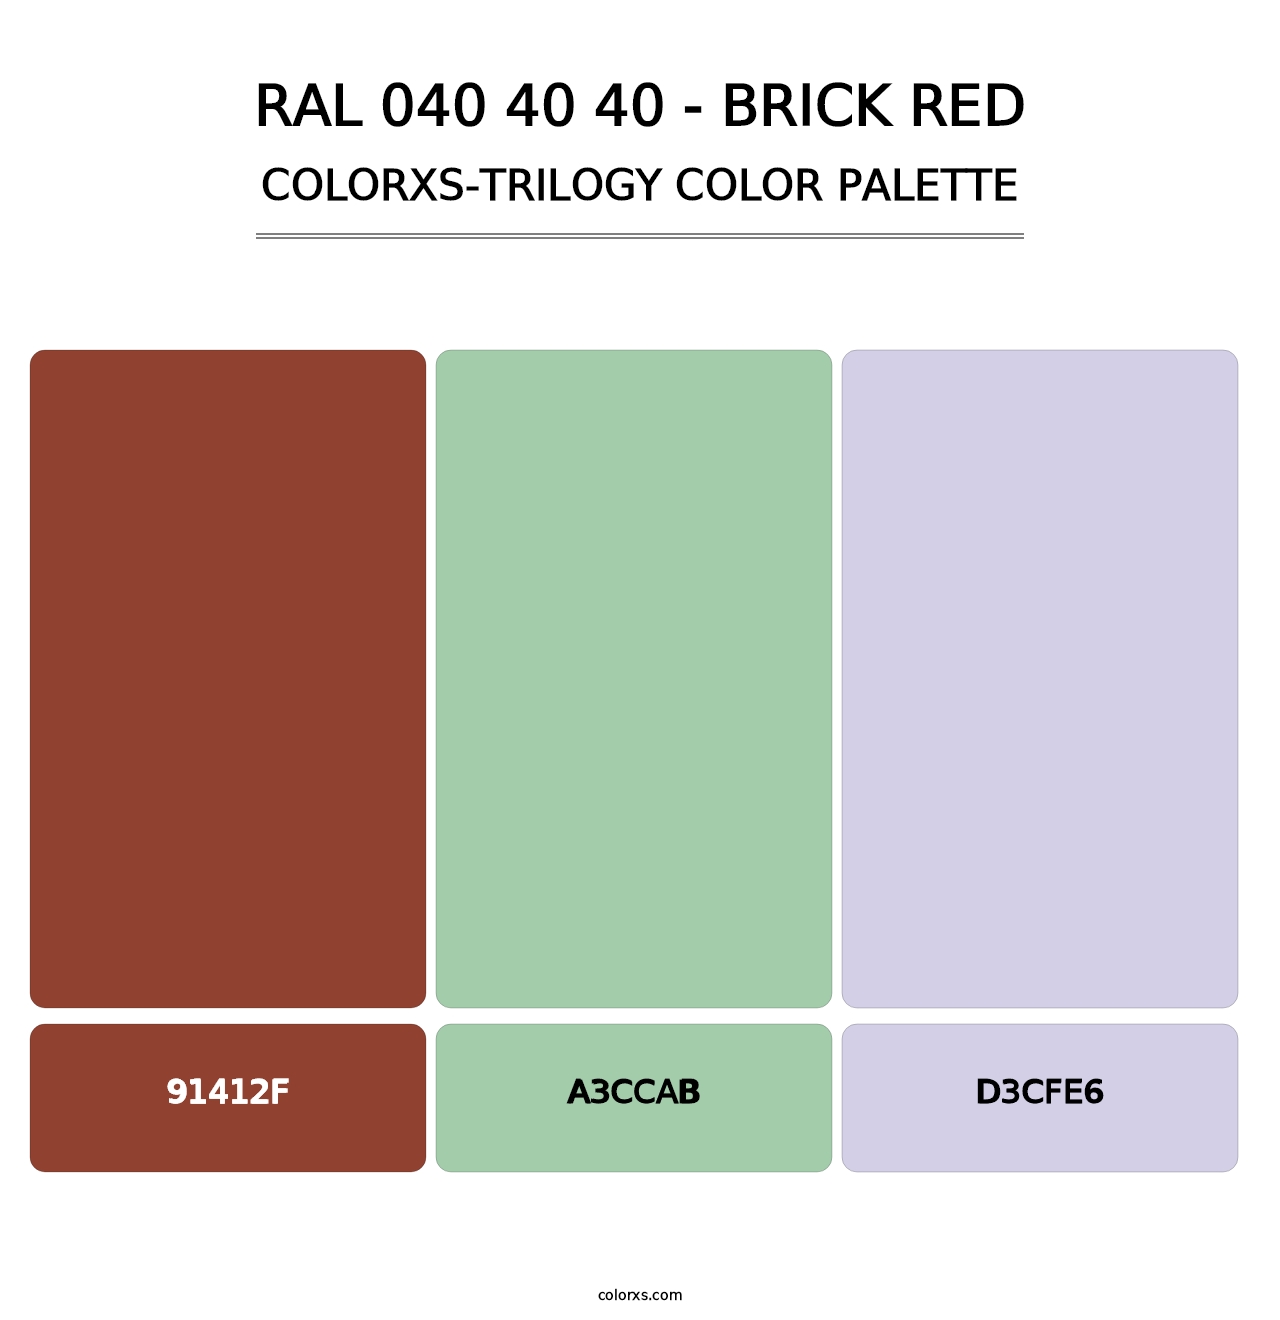 RAL 040 40 40 - Brick Red - Colorxs Trilogy Palette